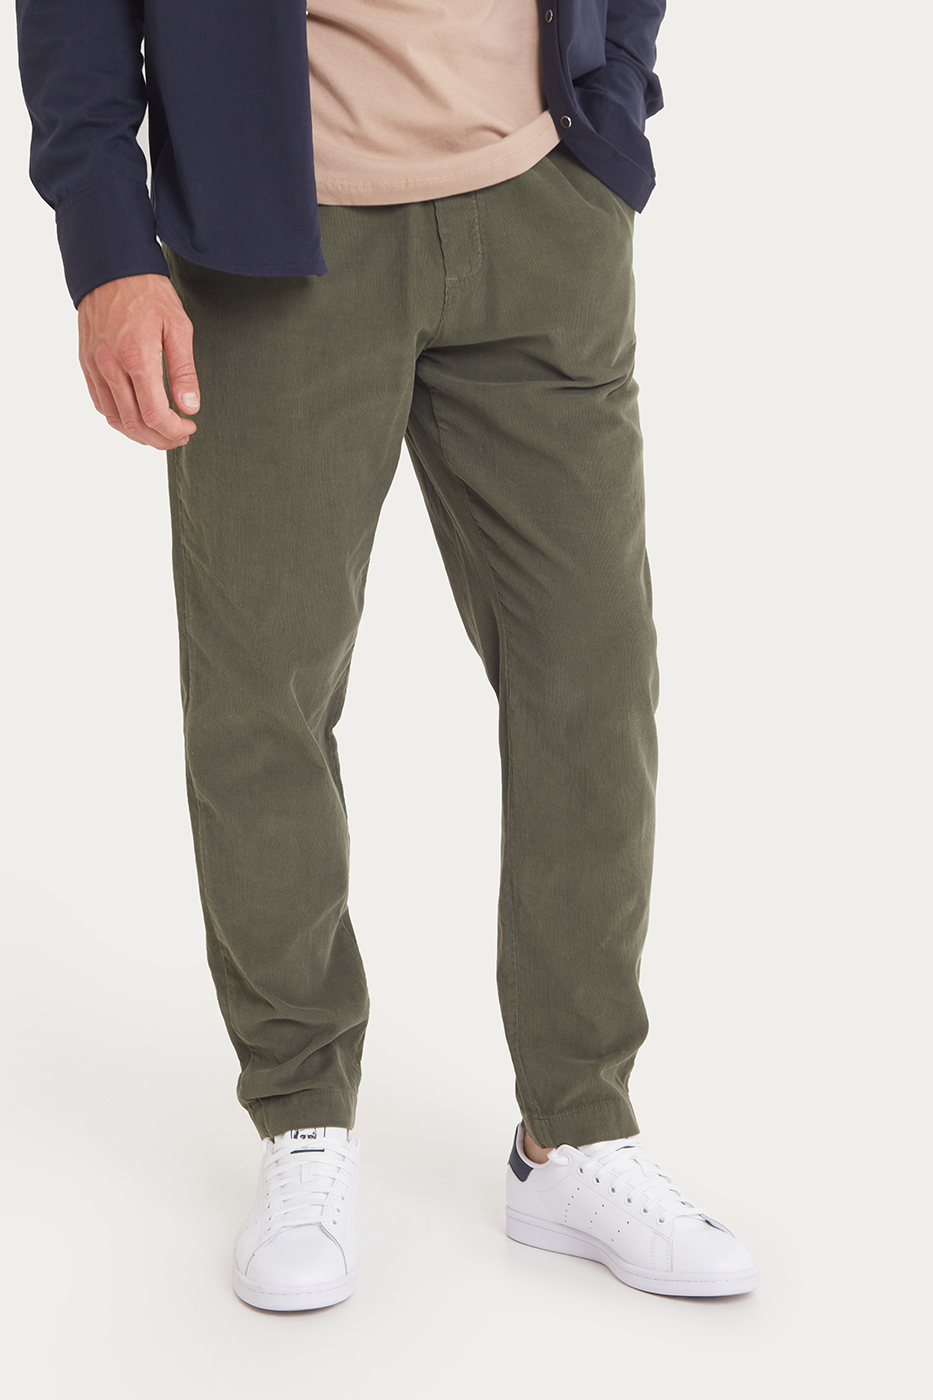 VARISCO Pantalone Army Green - Fuoriuso